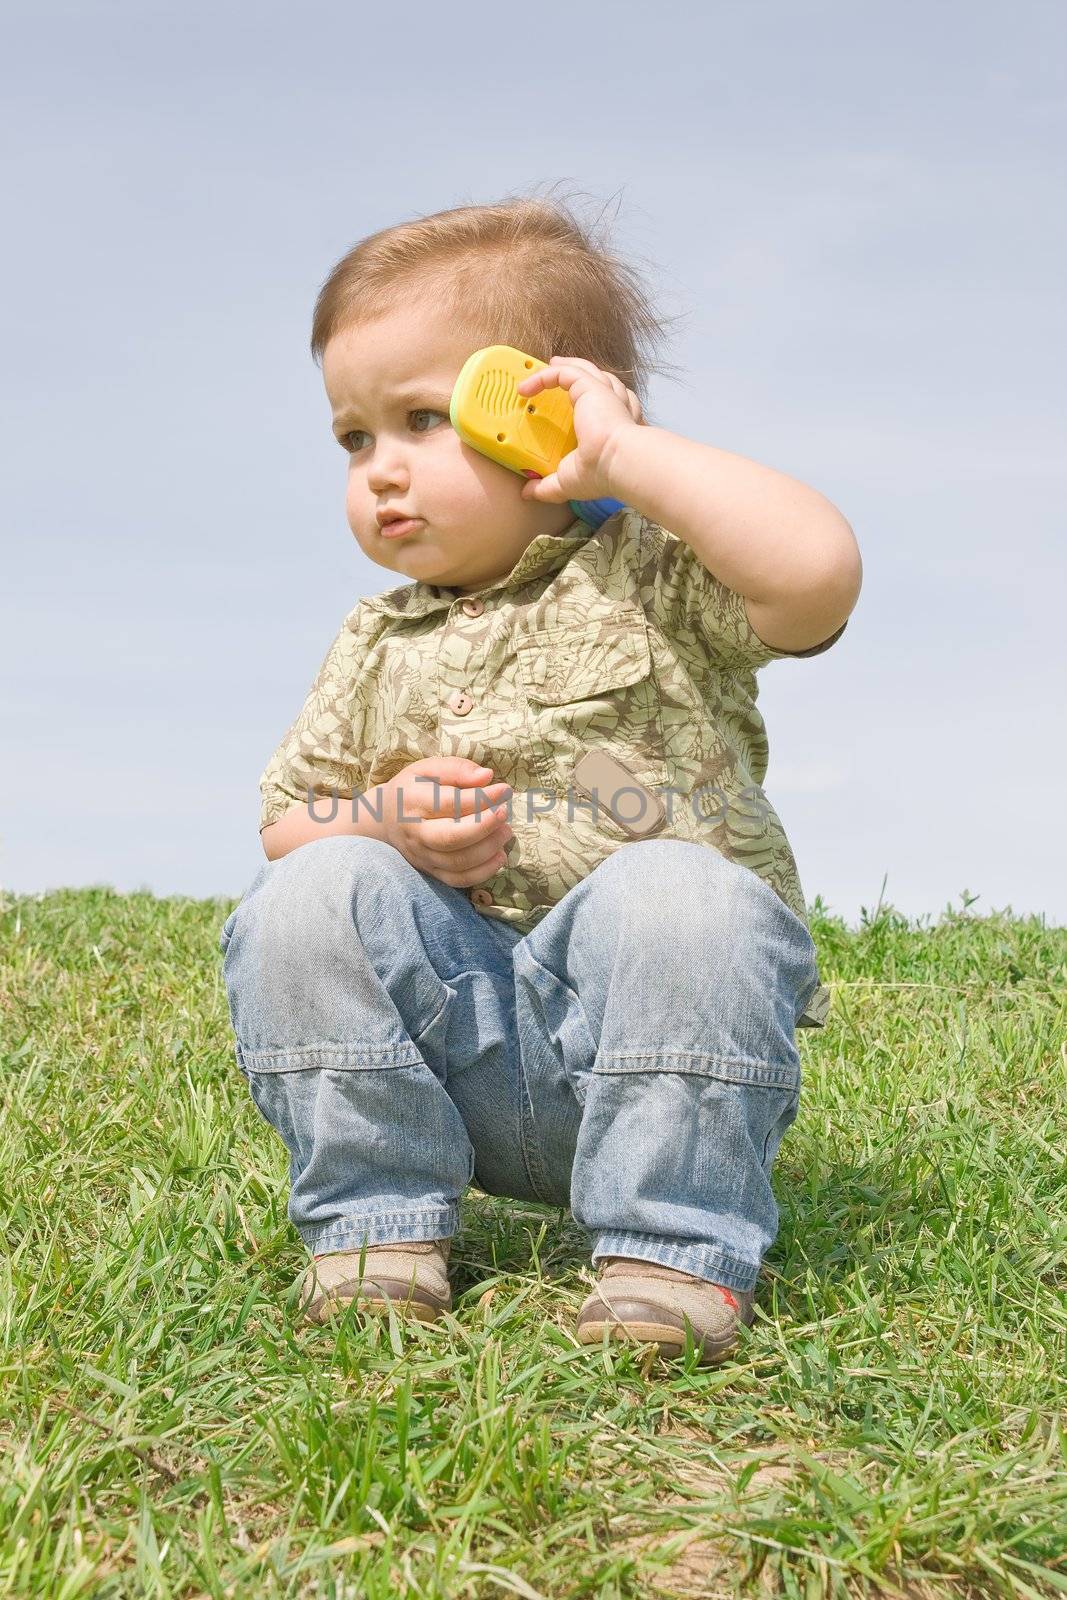 Little boy holding a toy cellphone near his ear